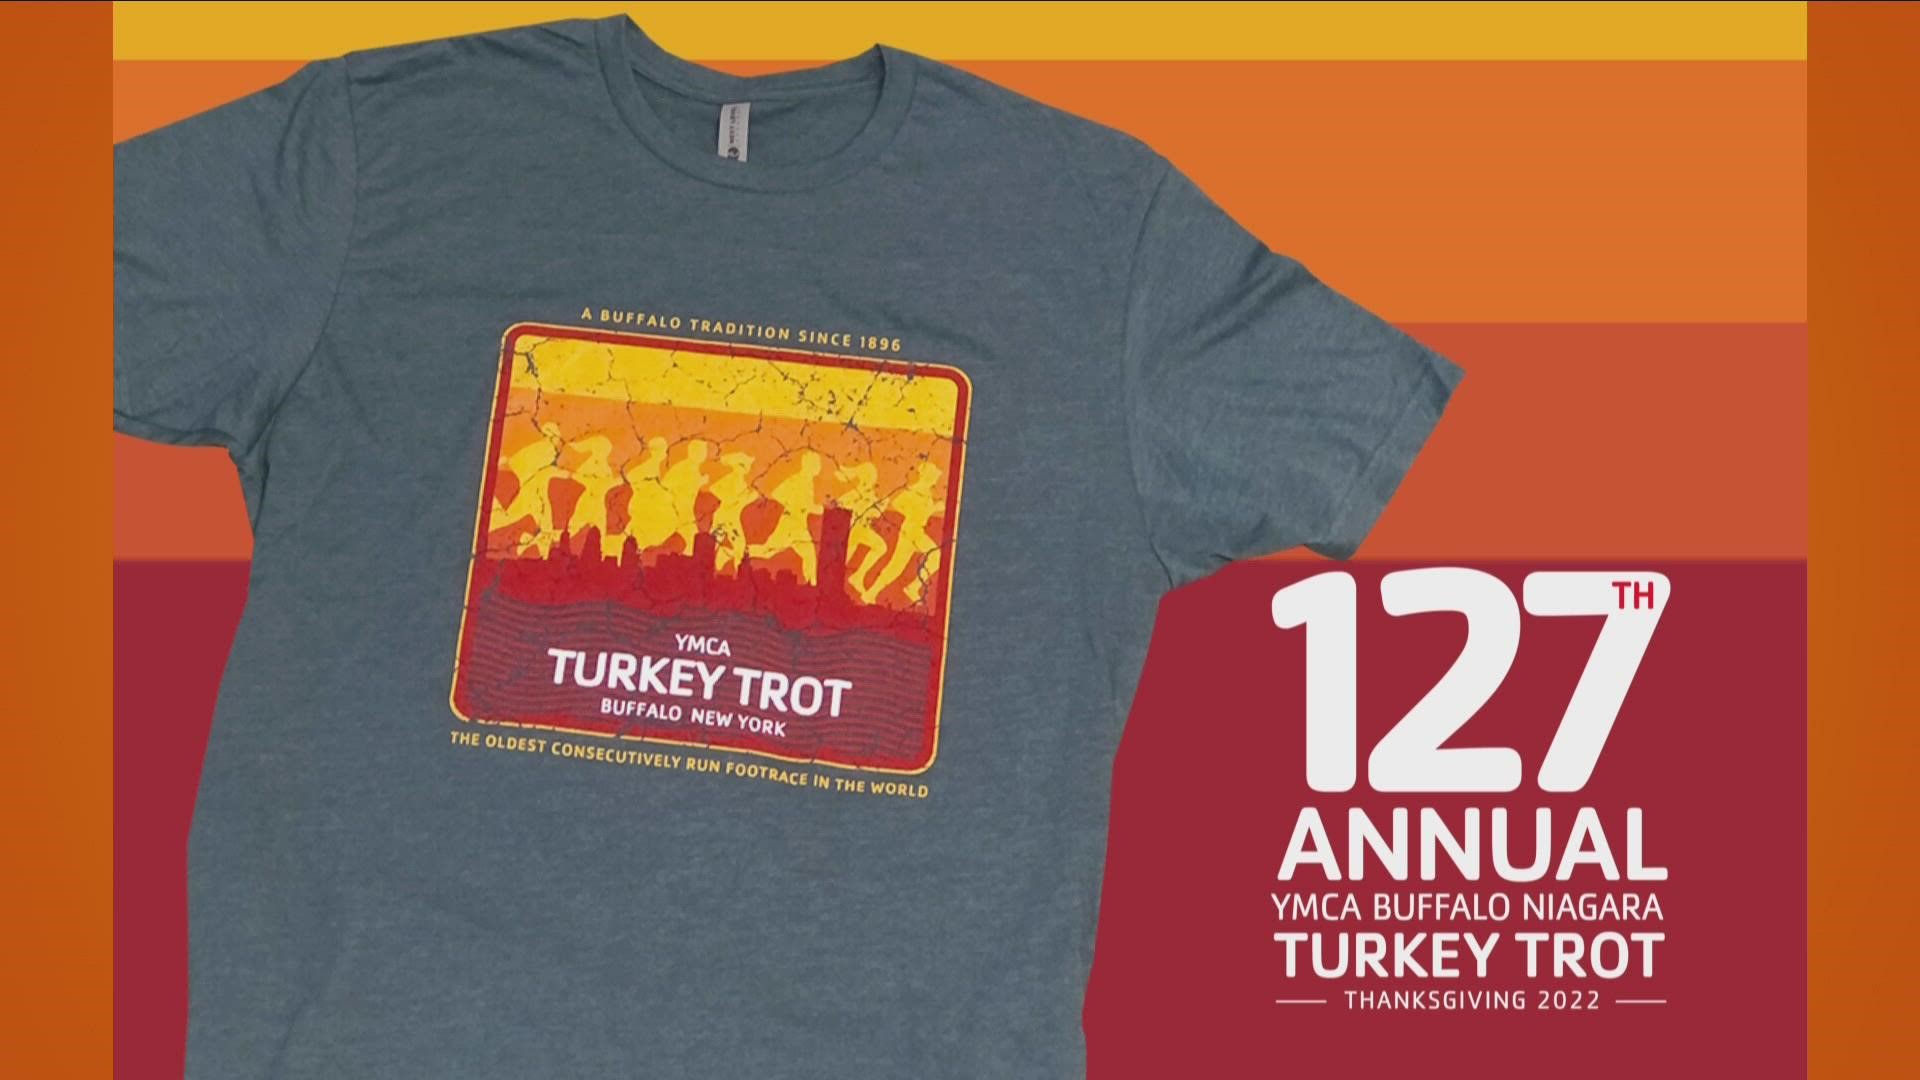 Turkey Trot 2022 shirt unveiled